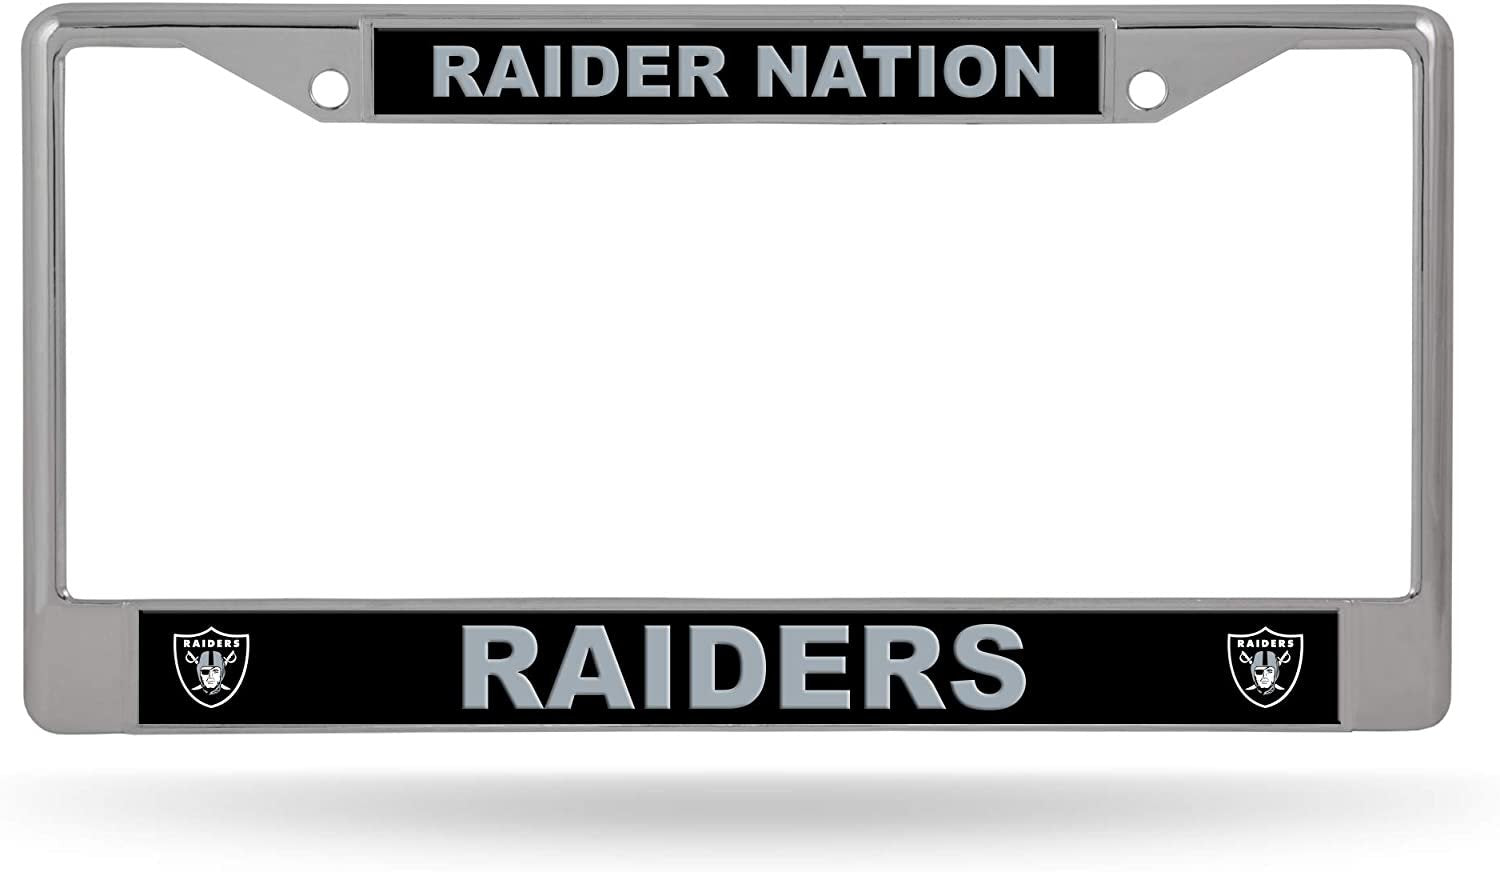 Las Vegas Raiders Raider Nation Premium Metal License Plate Frame Chrome Tag Cover, 12x6 Inch